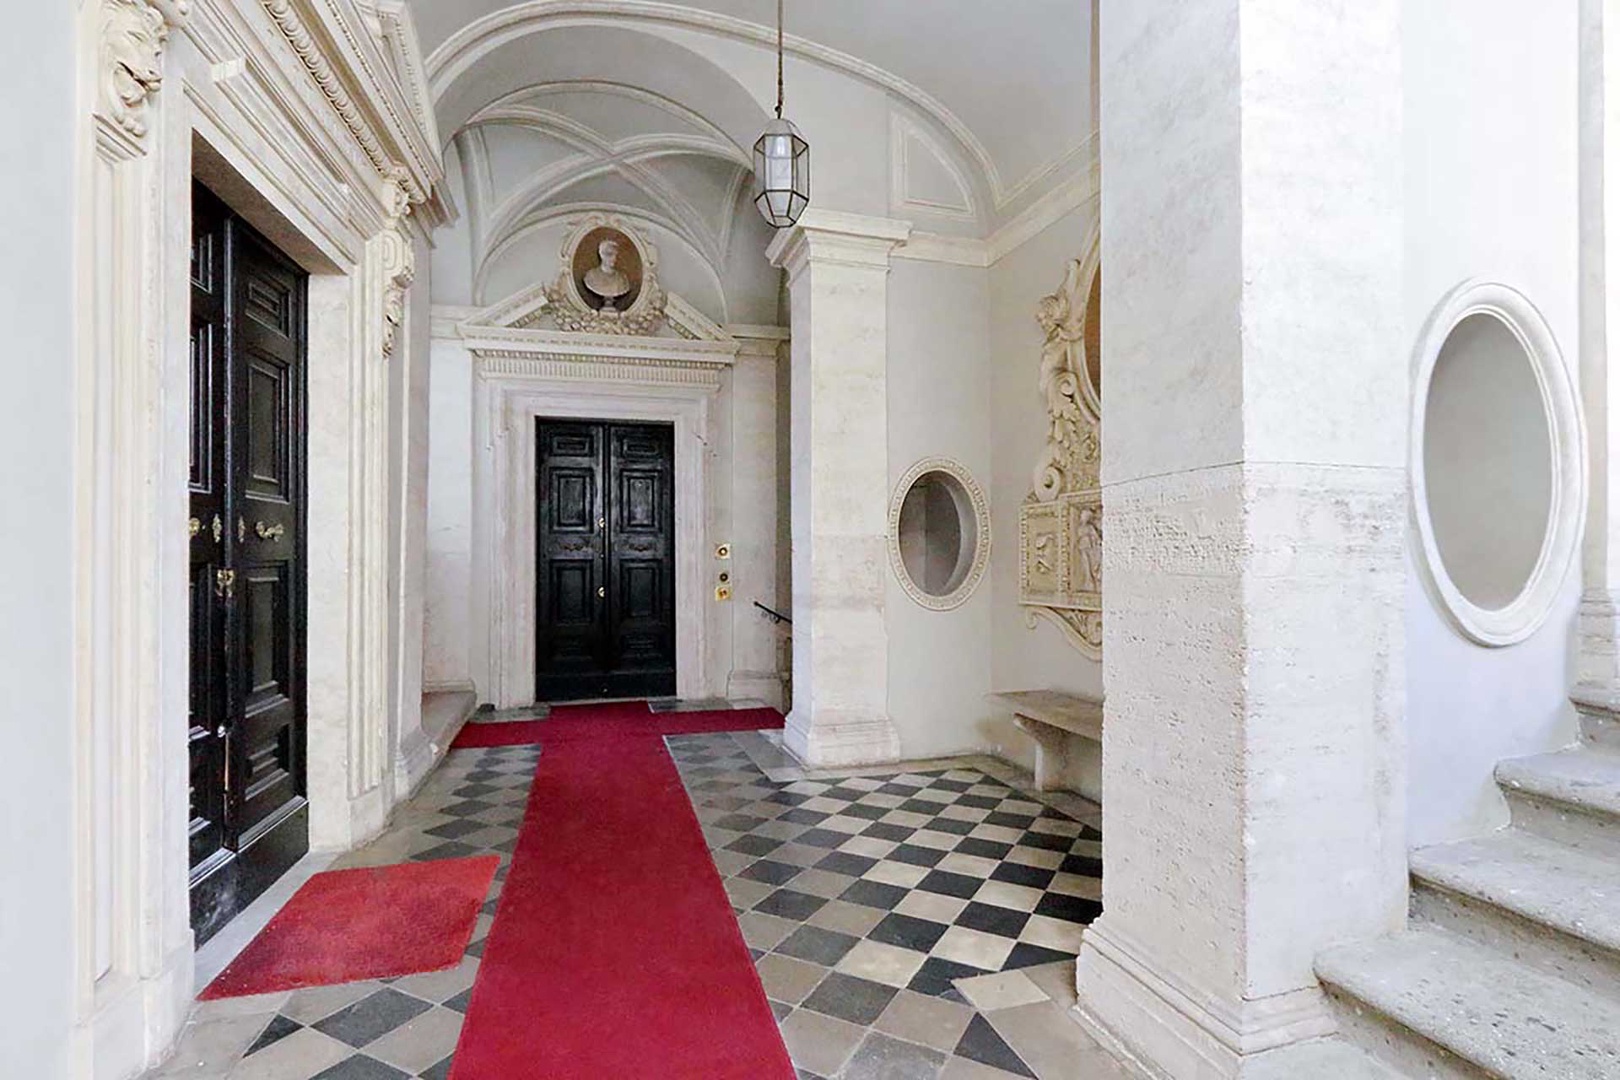 History haunts the halls of the palazzo.